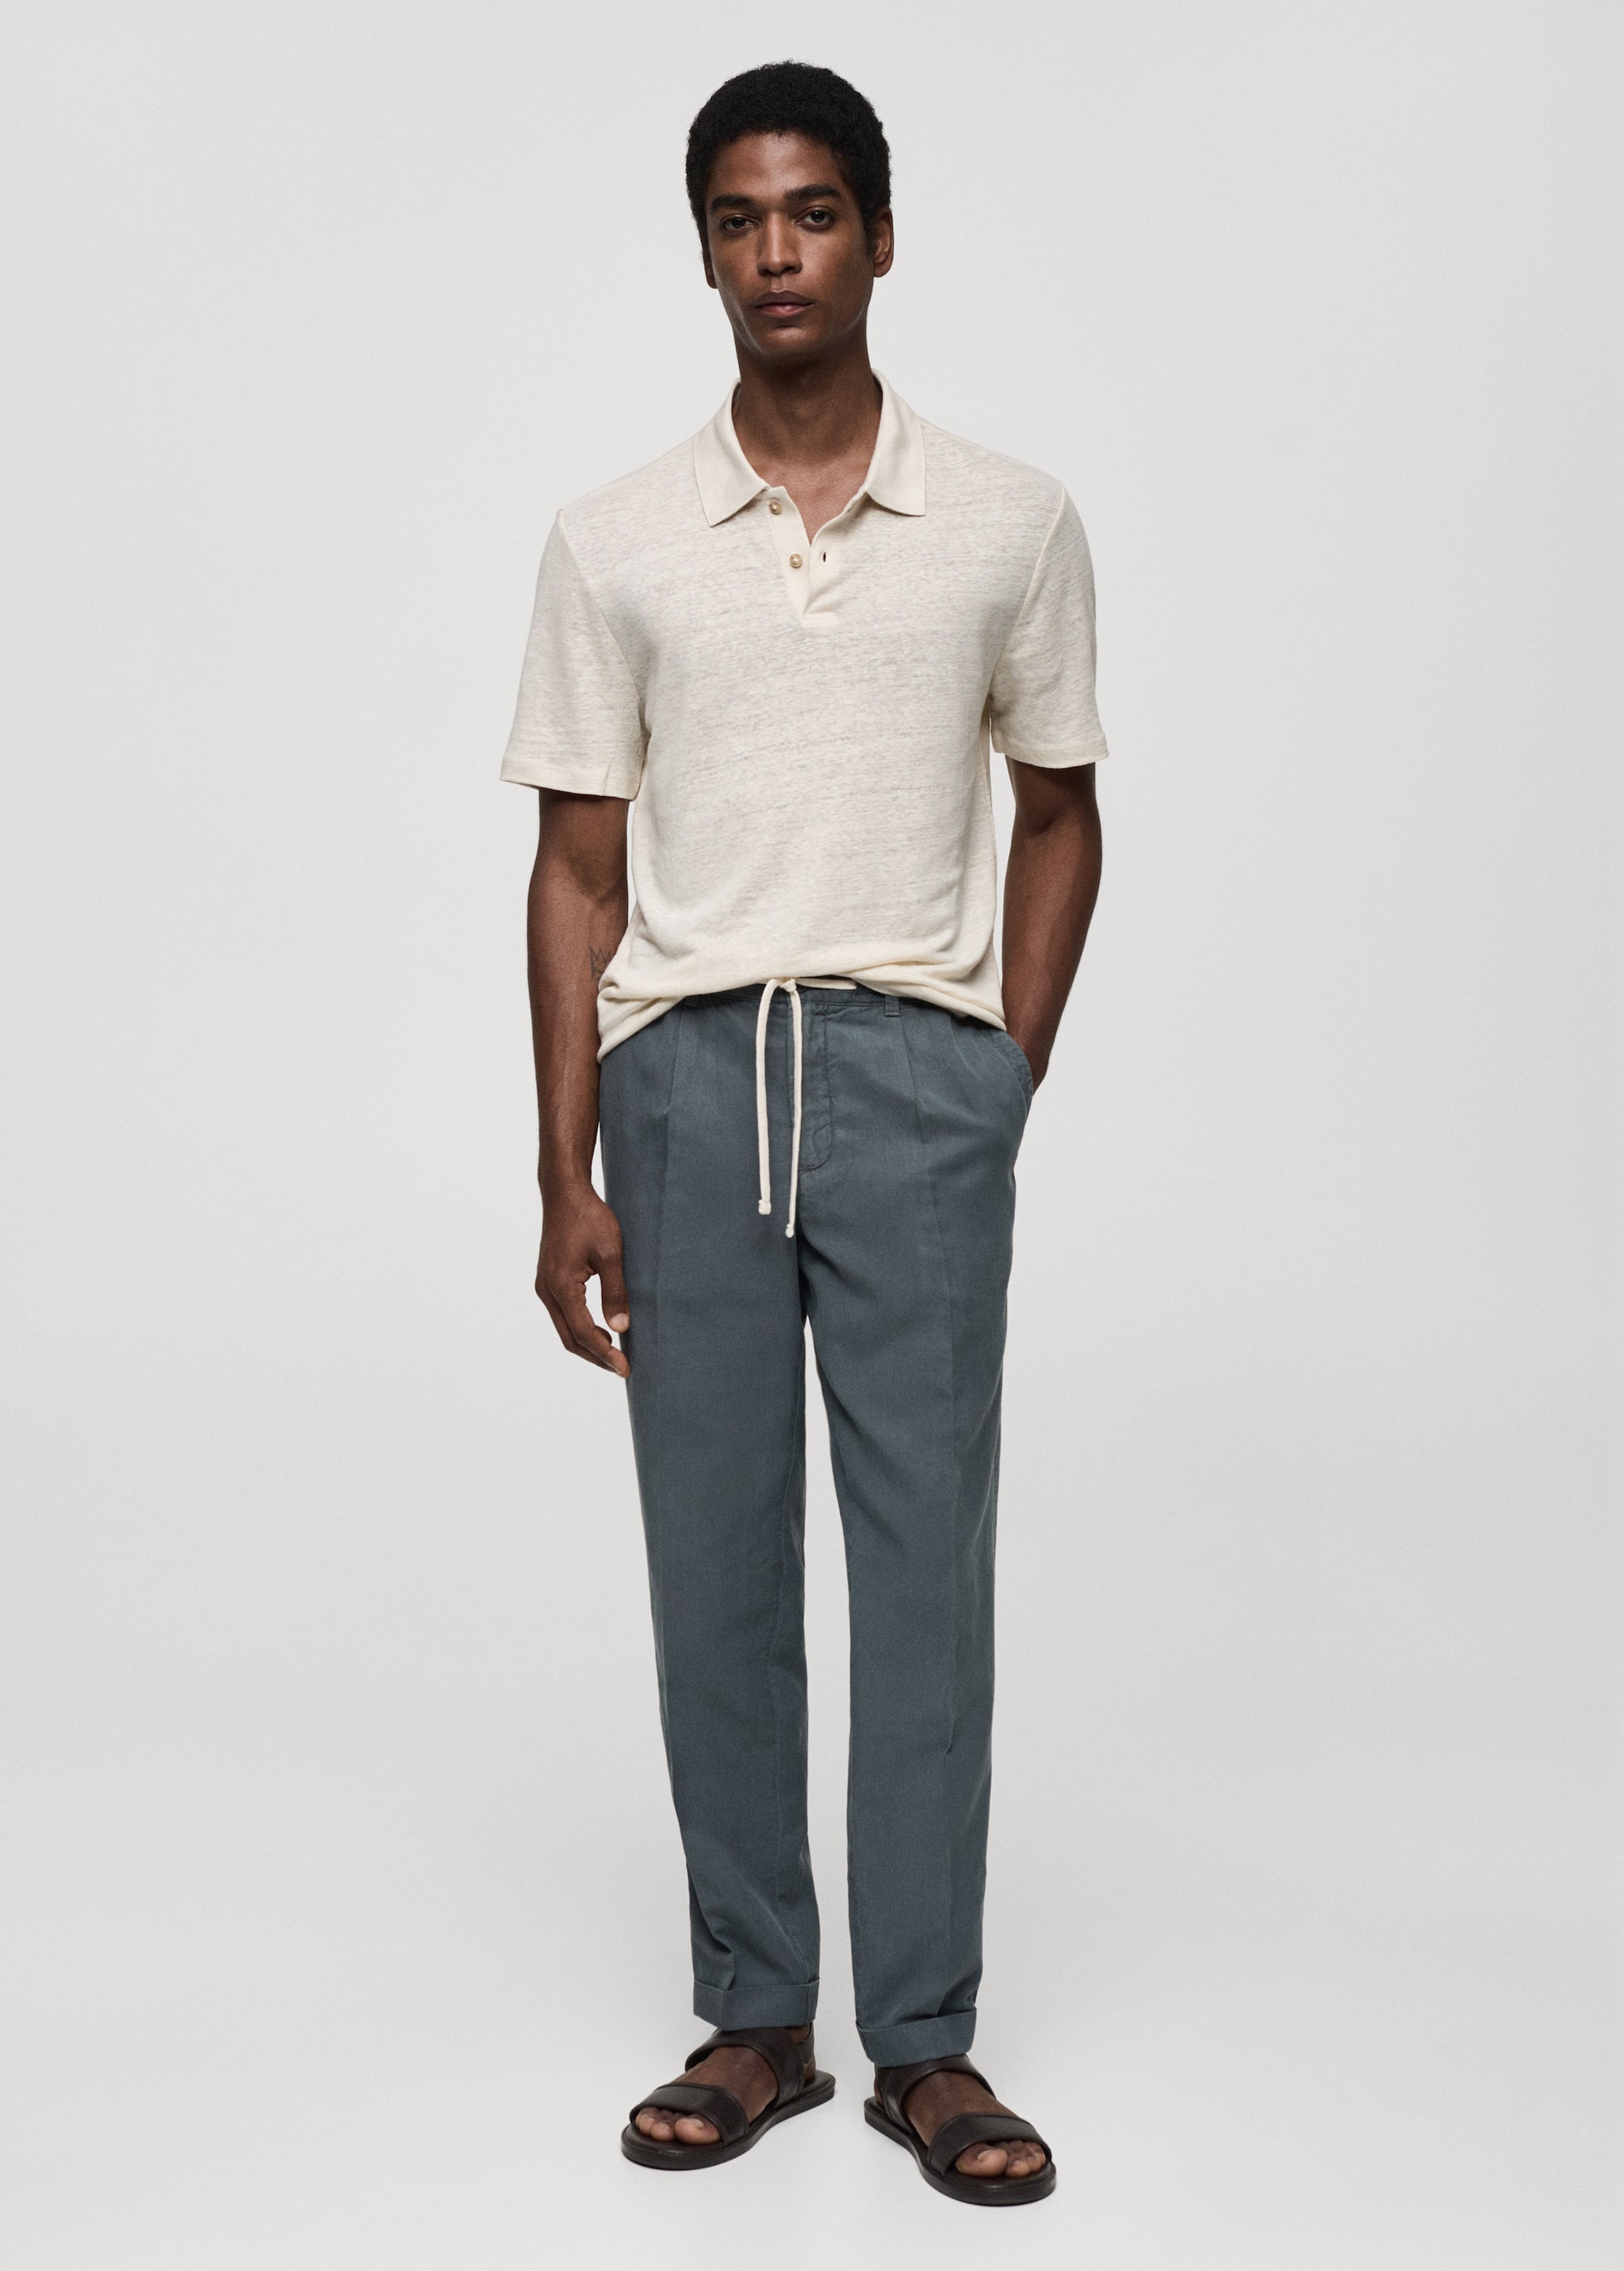 Slim fit 100% linen polo shirt - General plane